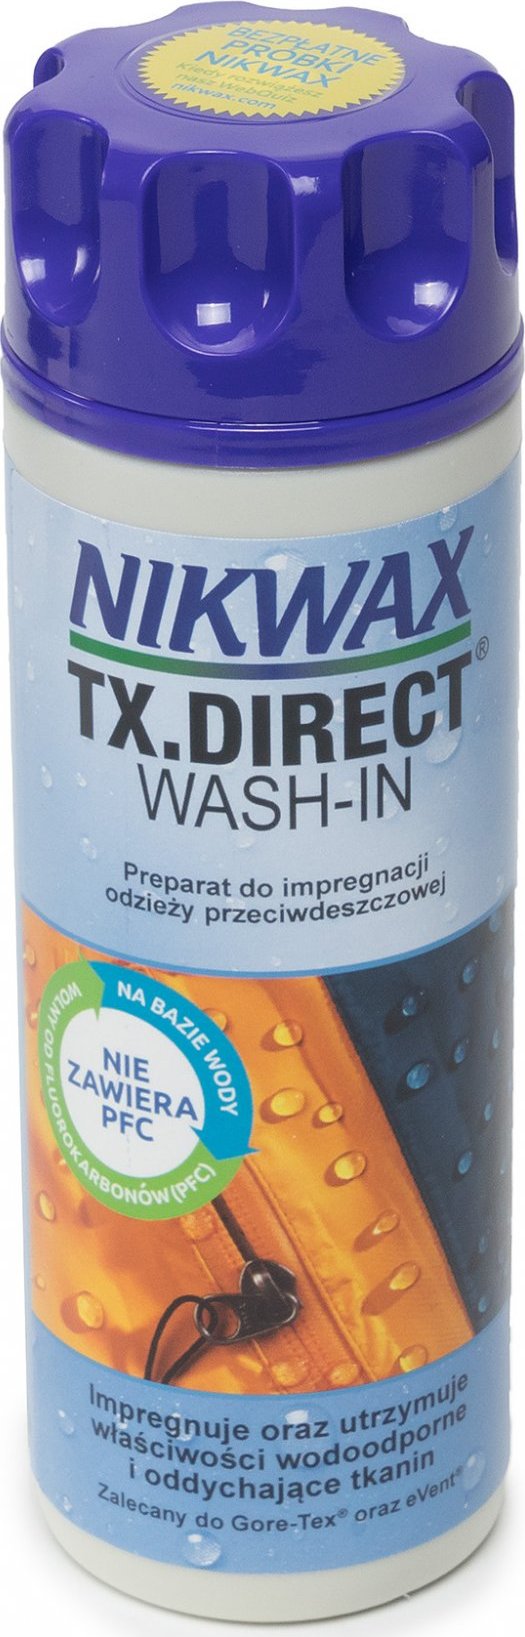 Nikwax Tx.Direct Wash-In